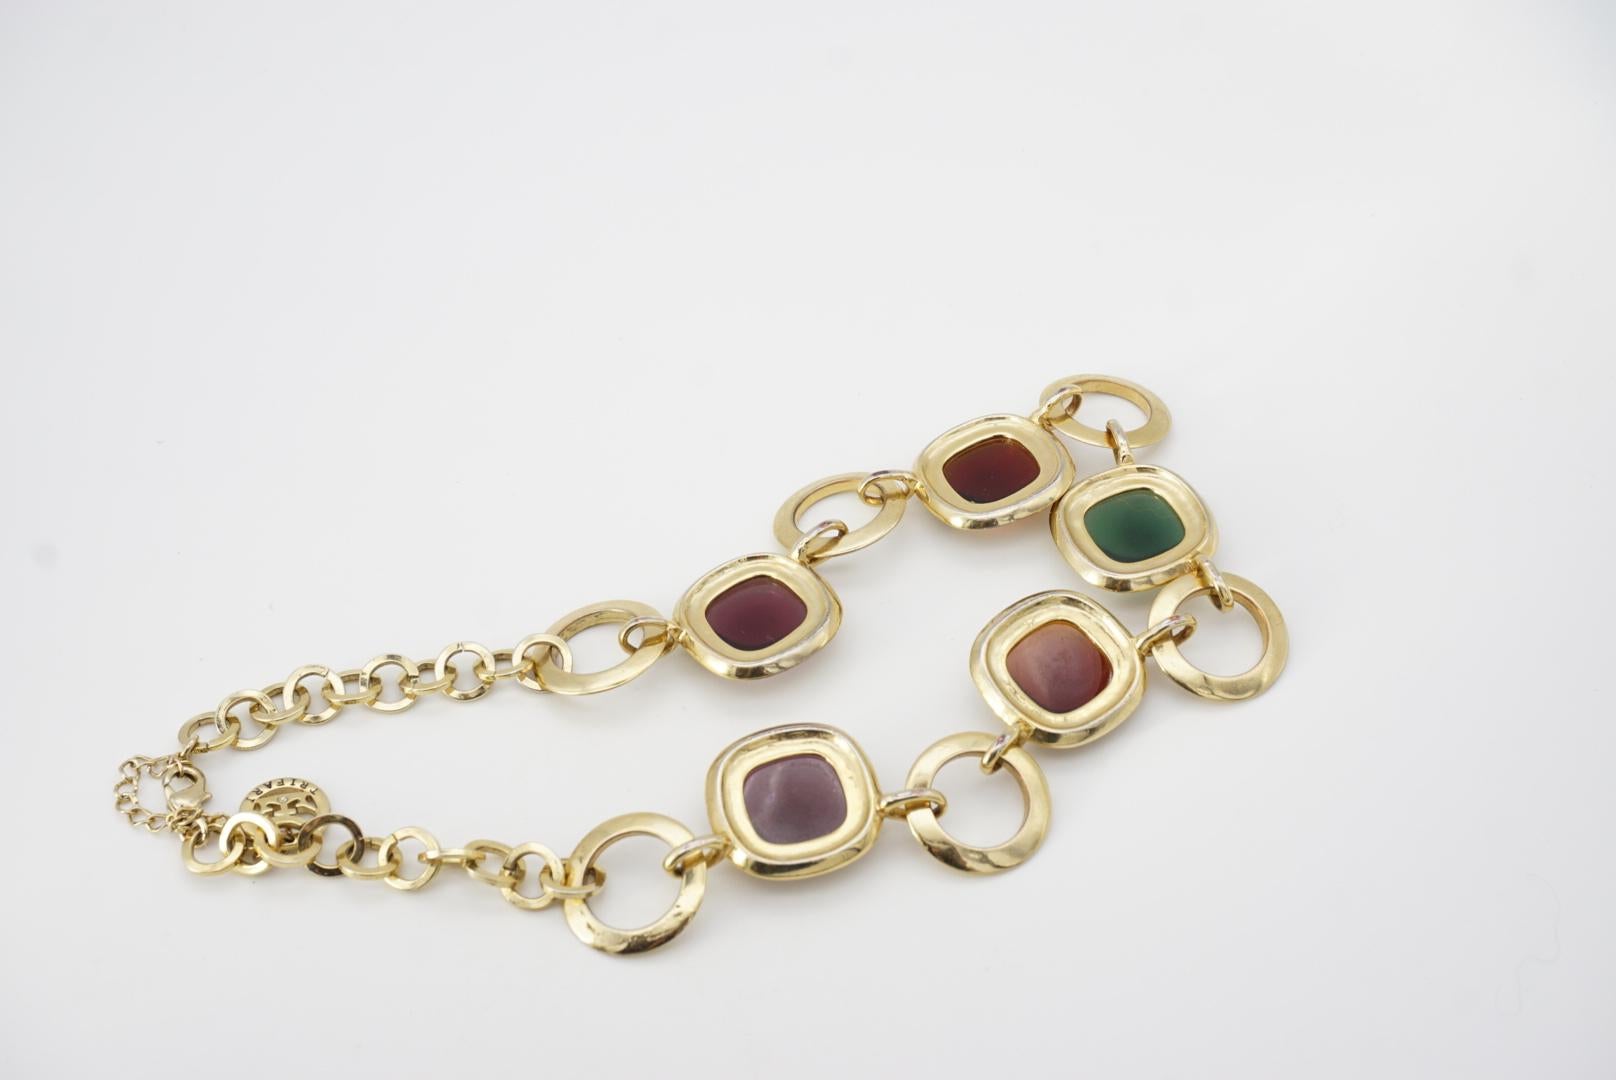 Crown Trifari 1950s Gripoix Purple Amber Green Round Interlock Pendant Necklace For Sale 7